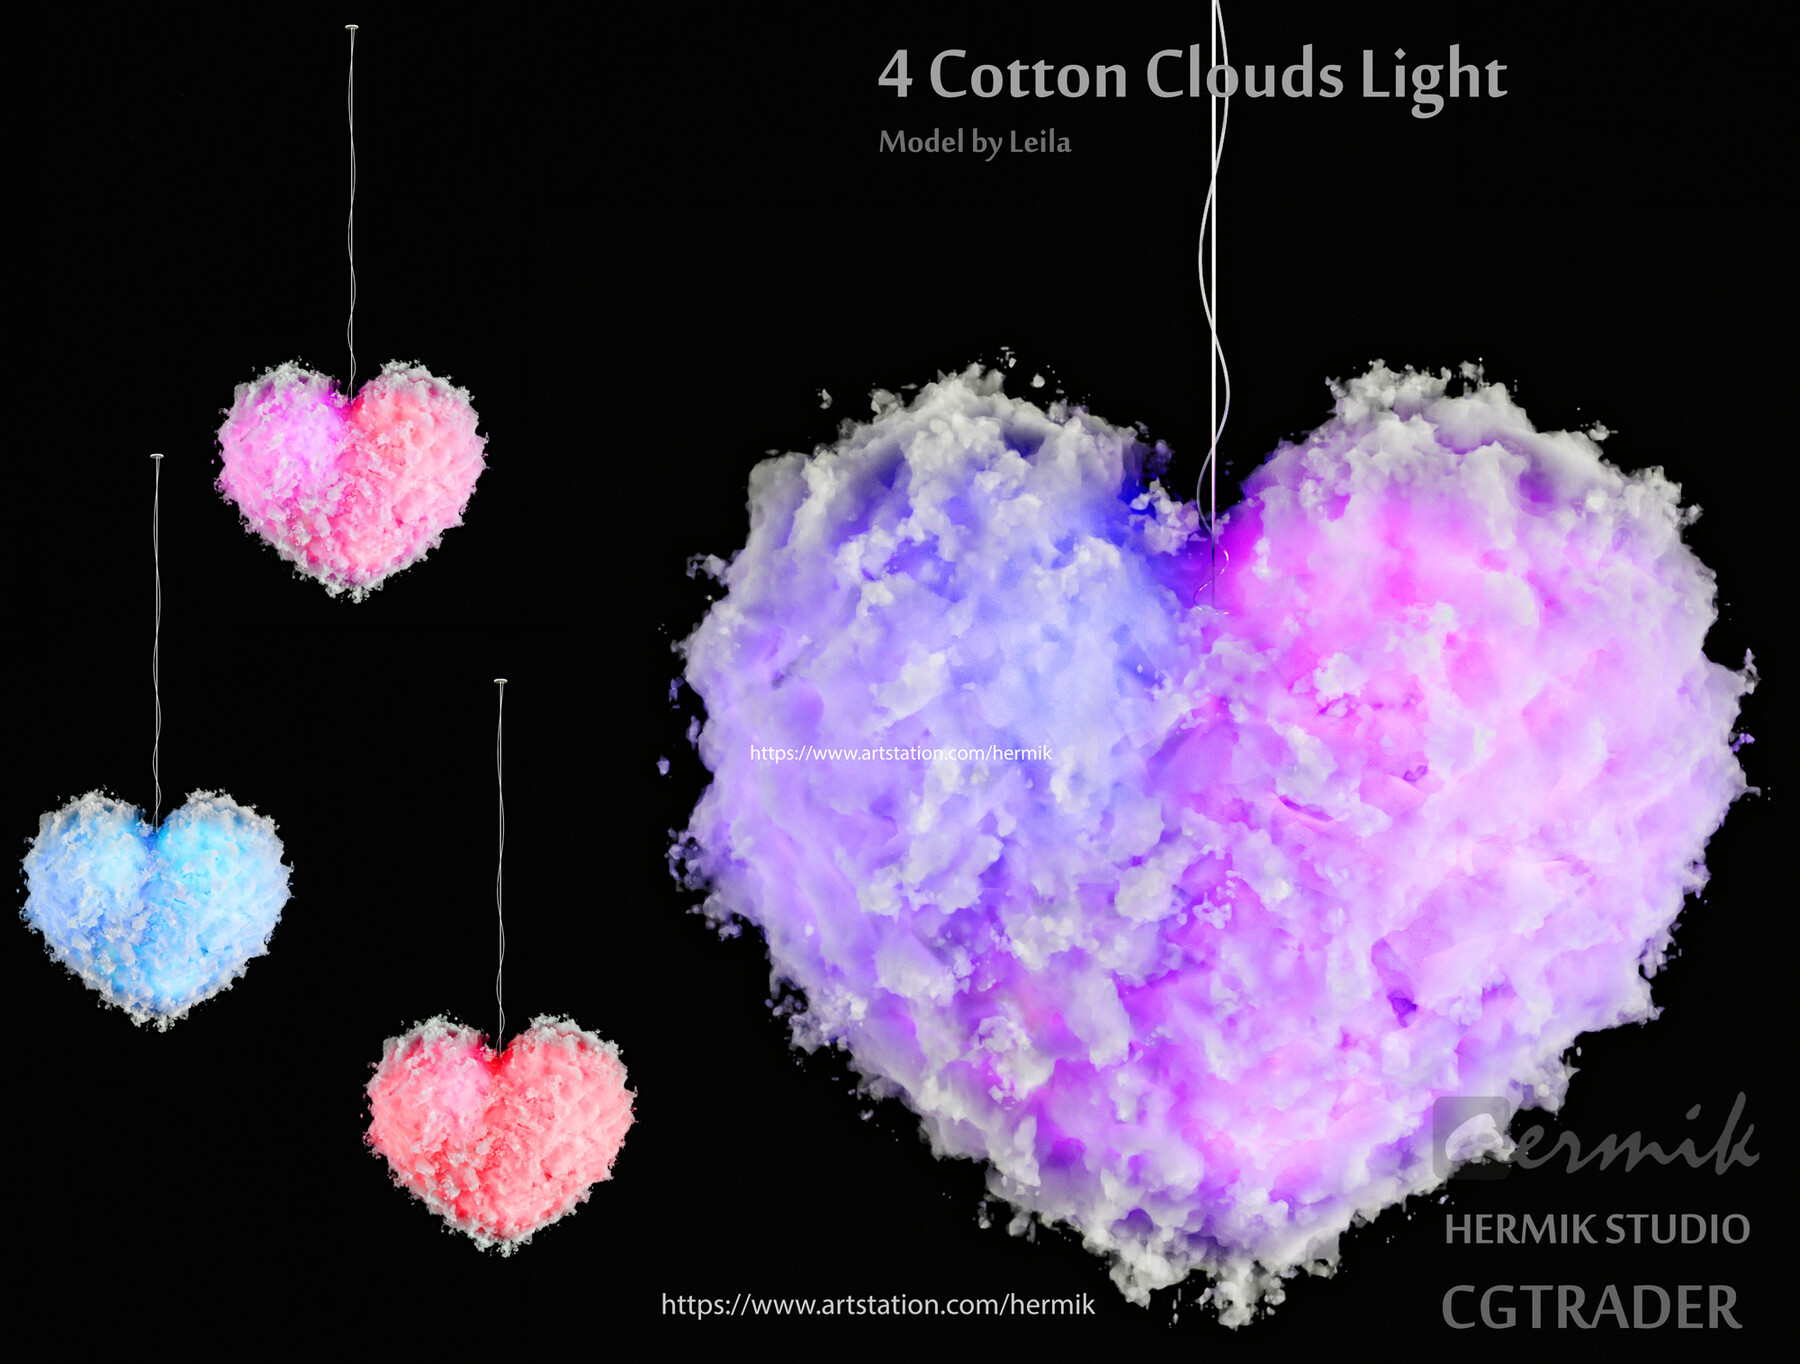 Cotton clouds lights